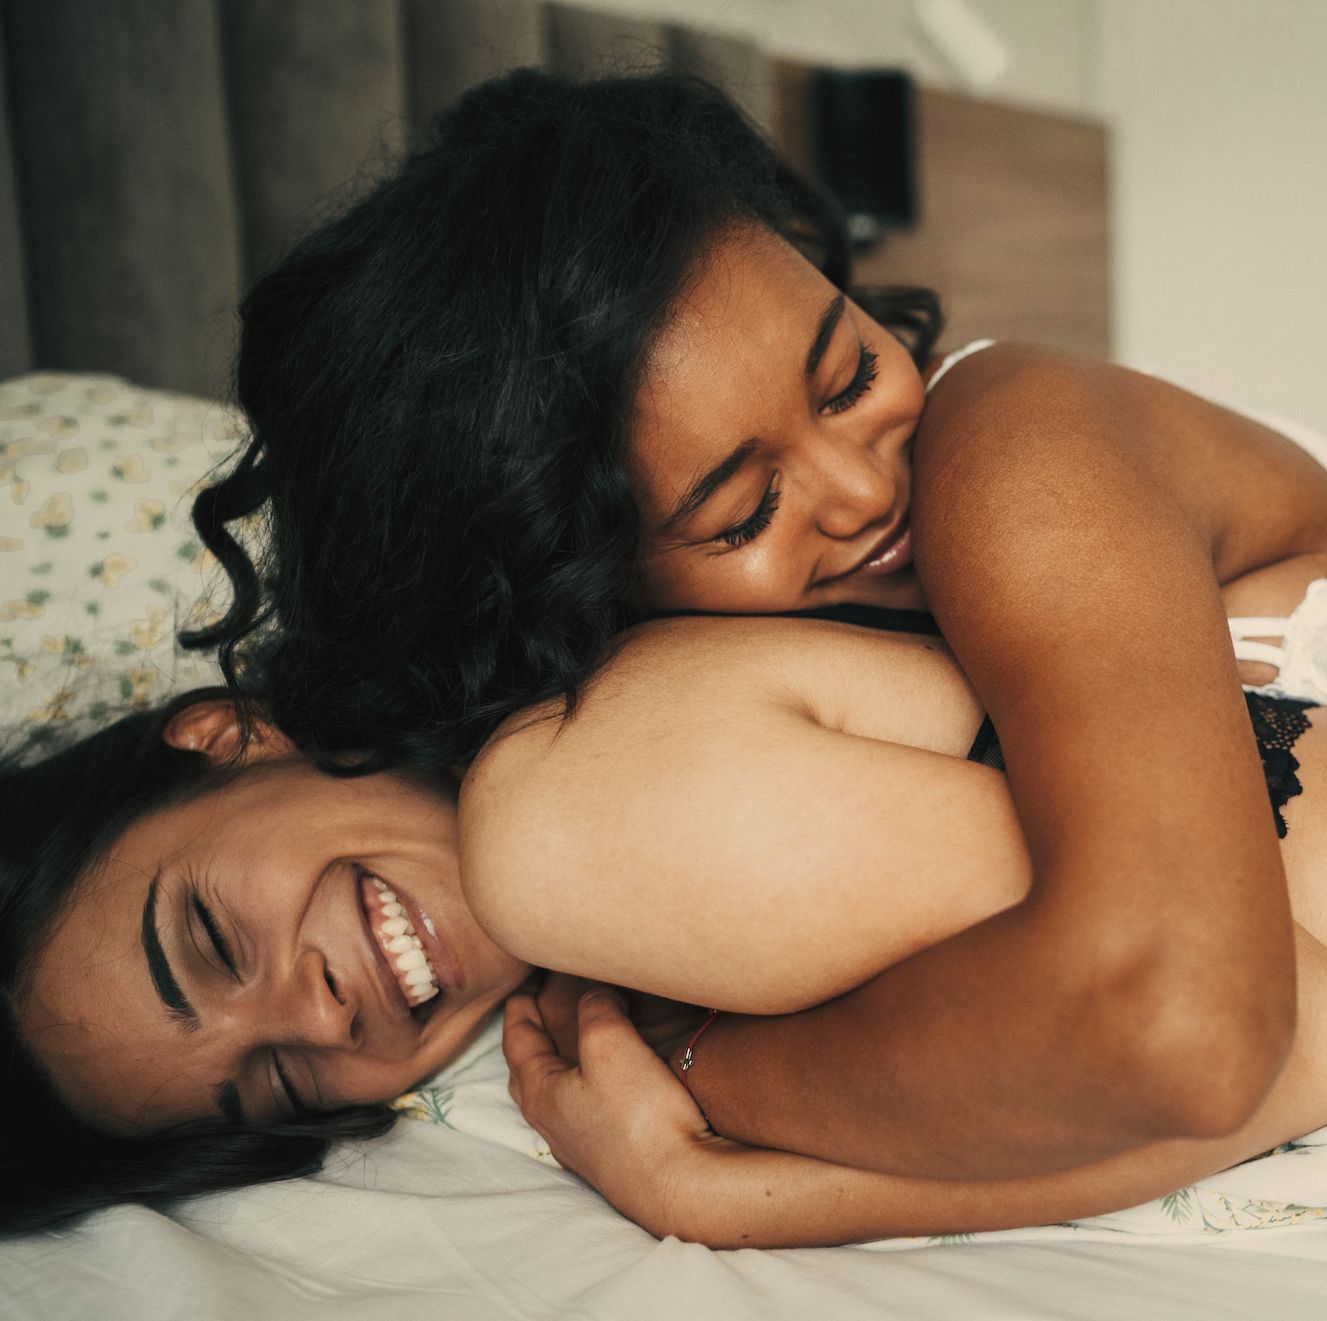 becki sheets share hot lesbians having fun photos